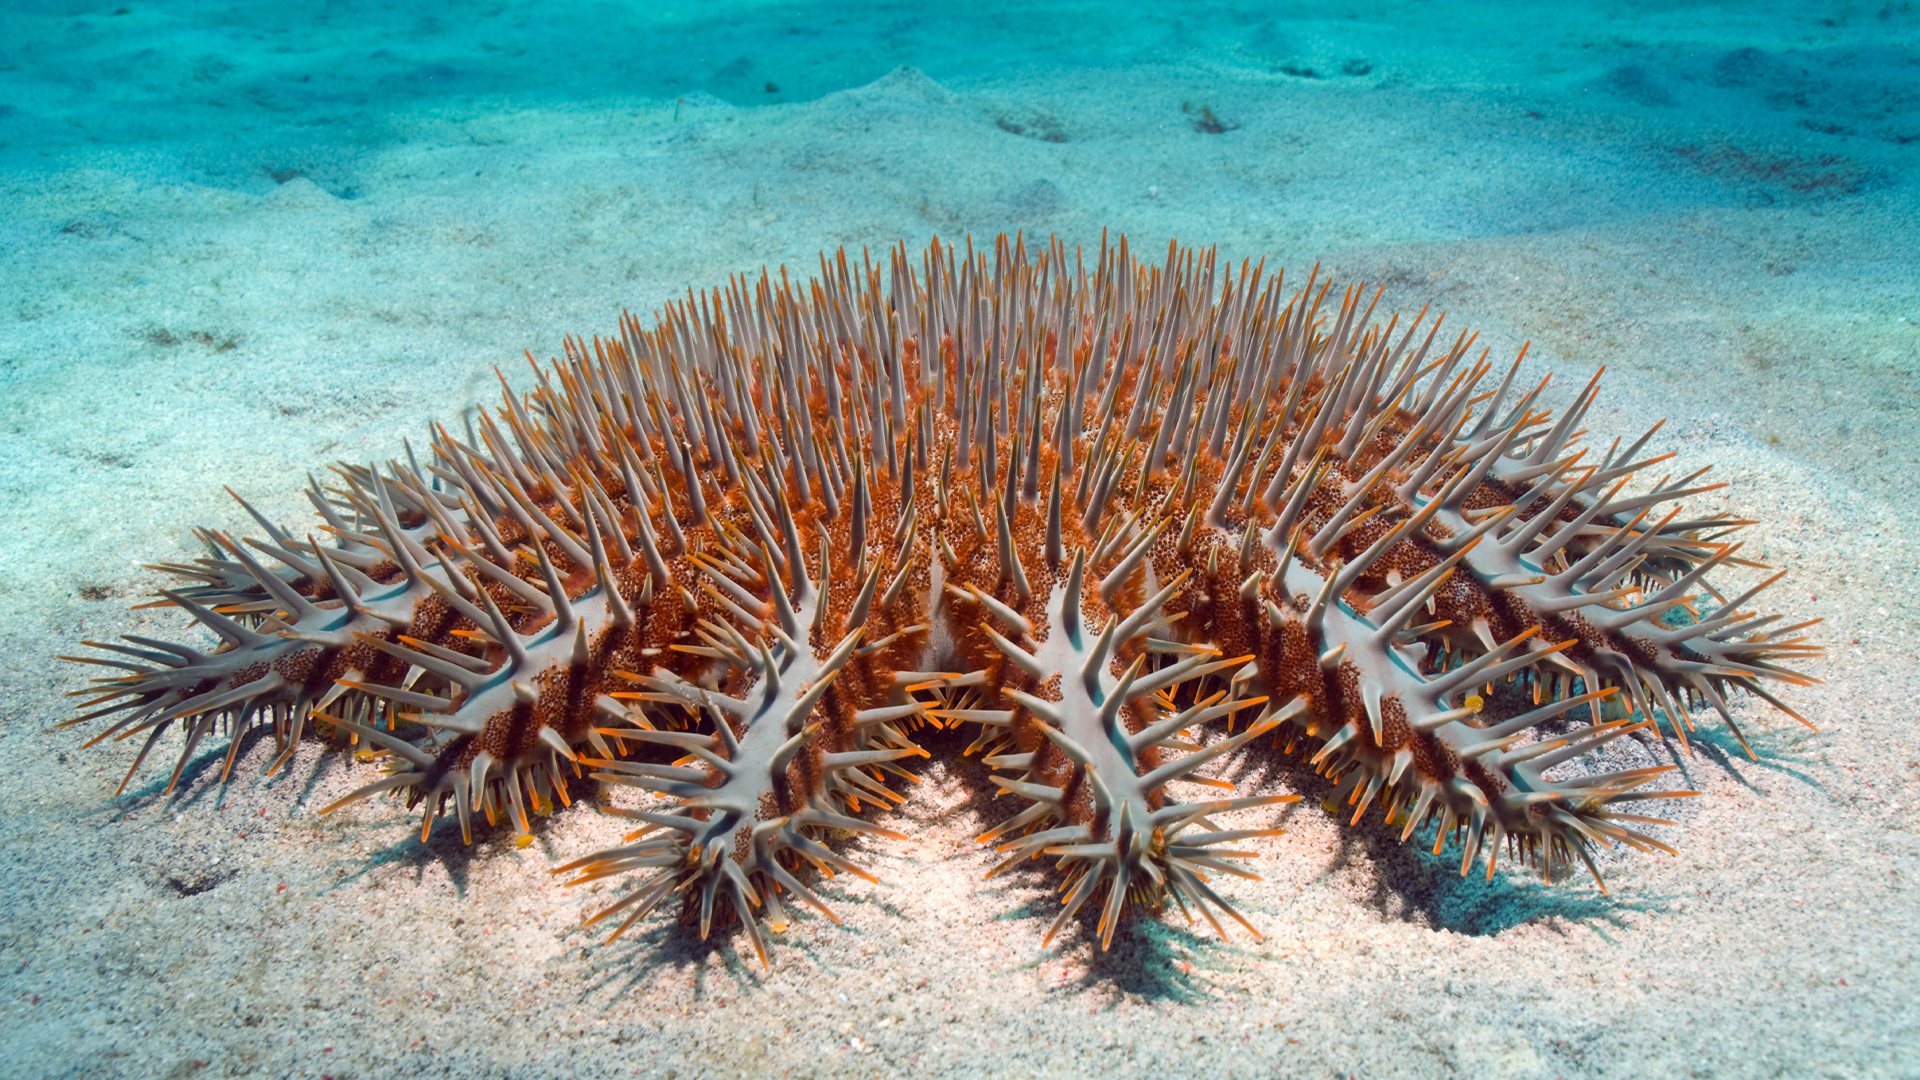 Crown-of-thorns starfish.